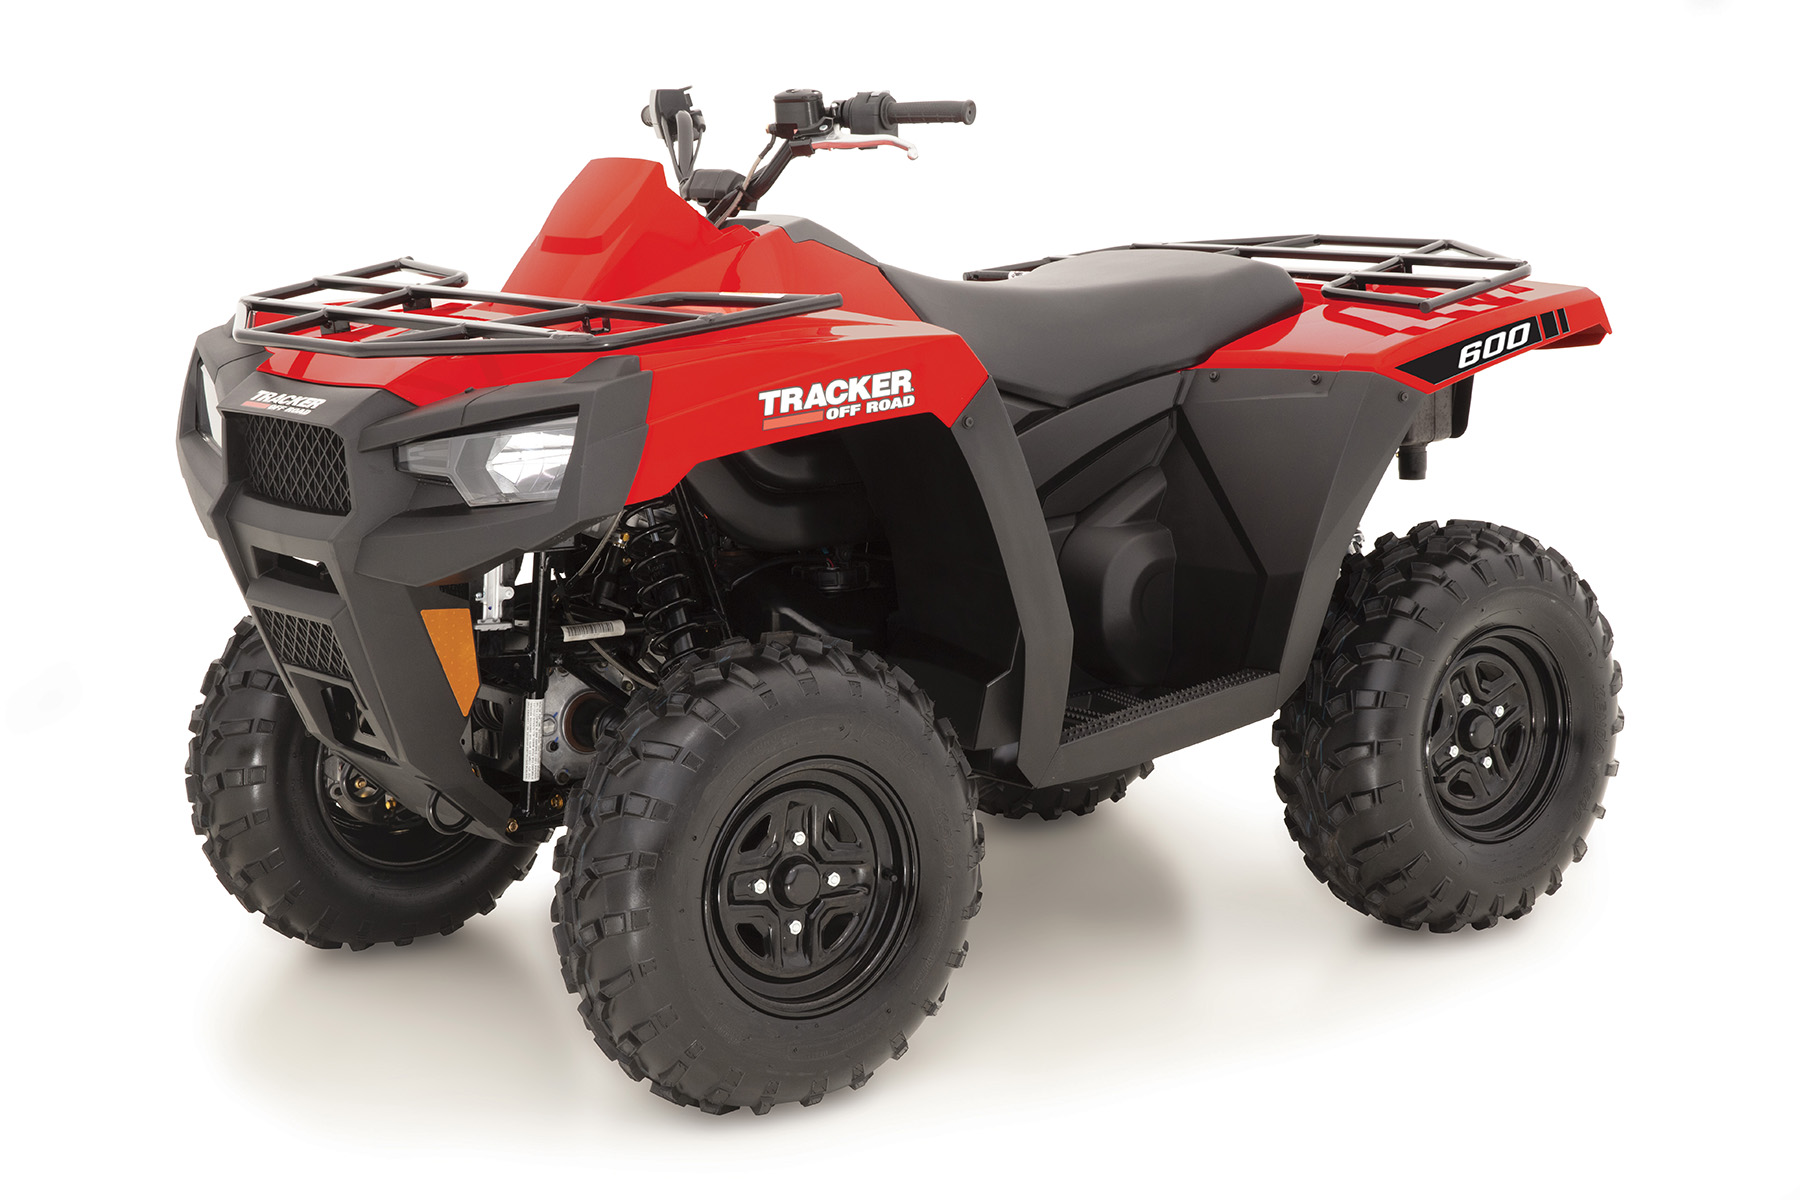 Red Tracker 600 ATV Four Wheeler